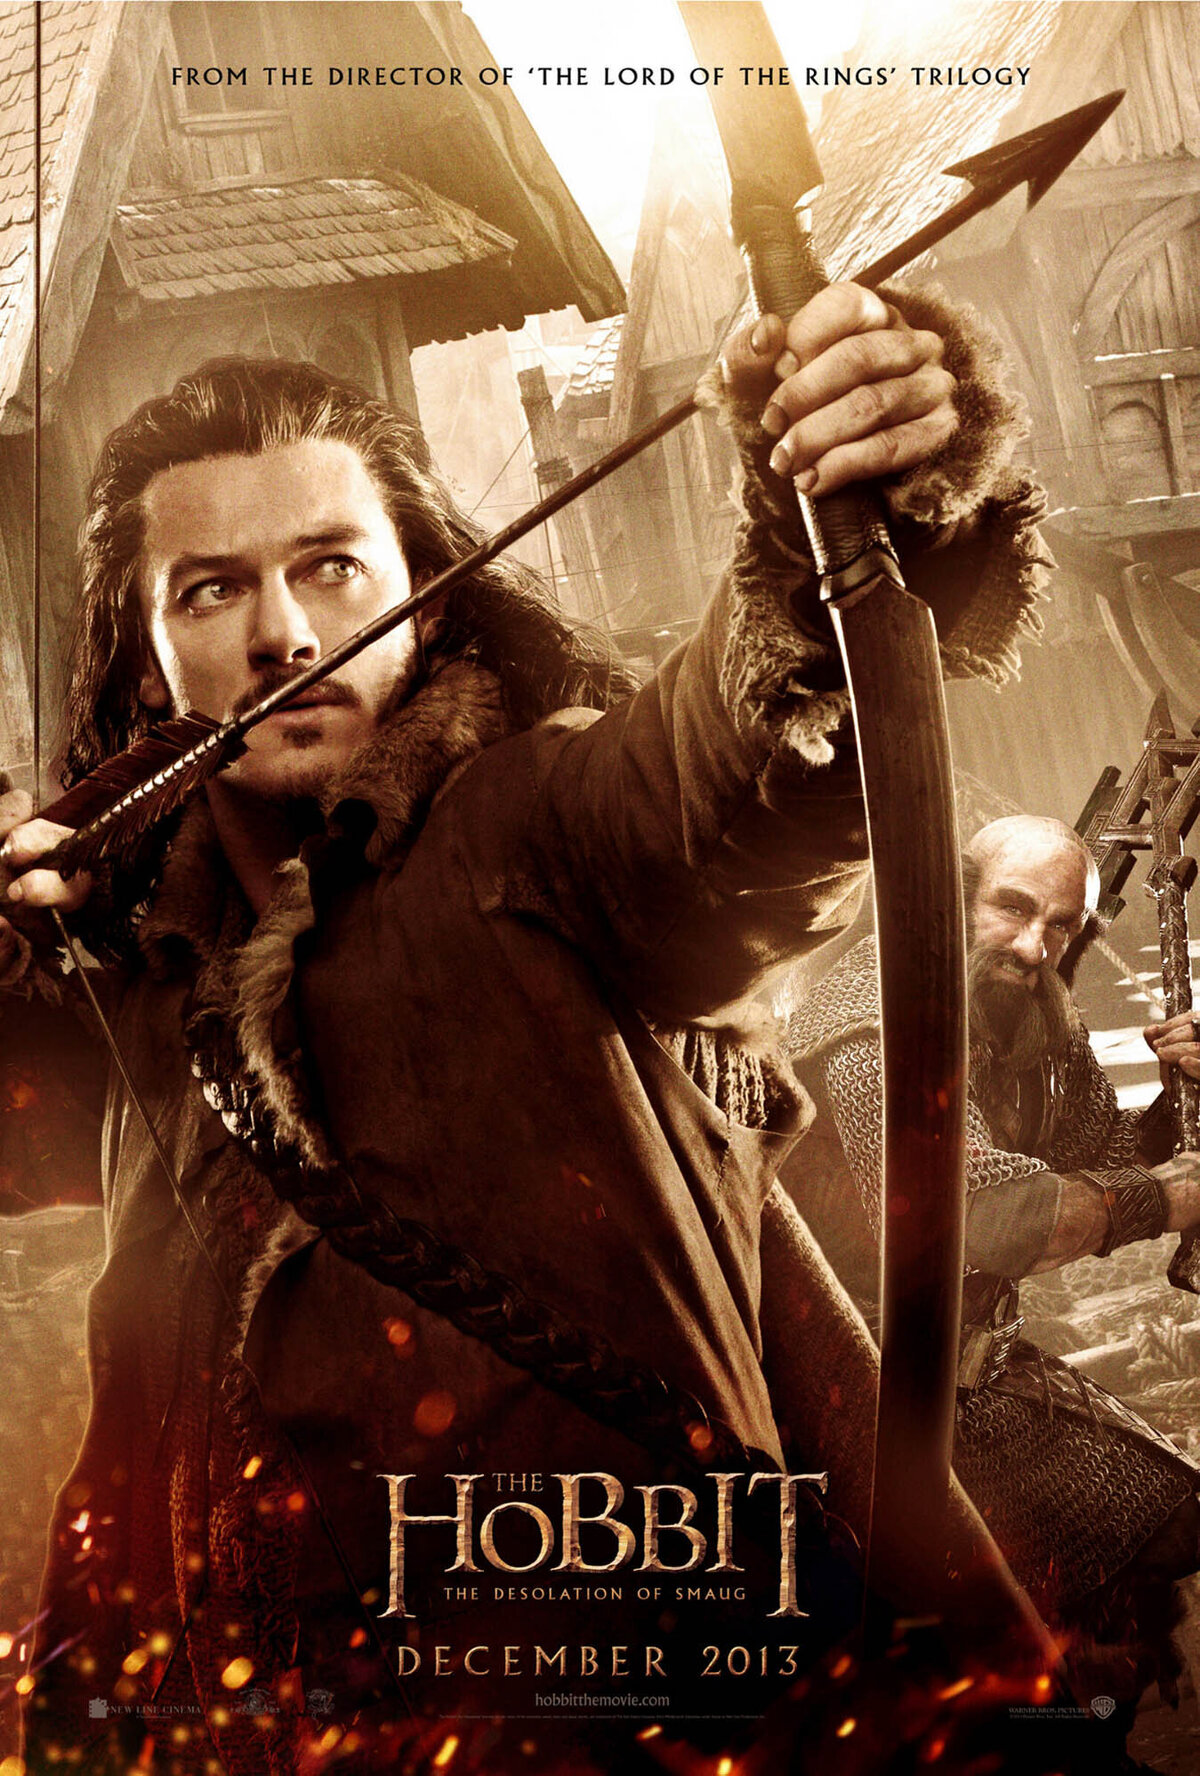 The hobbit 2 design poster